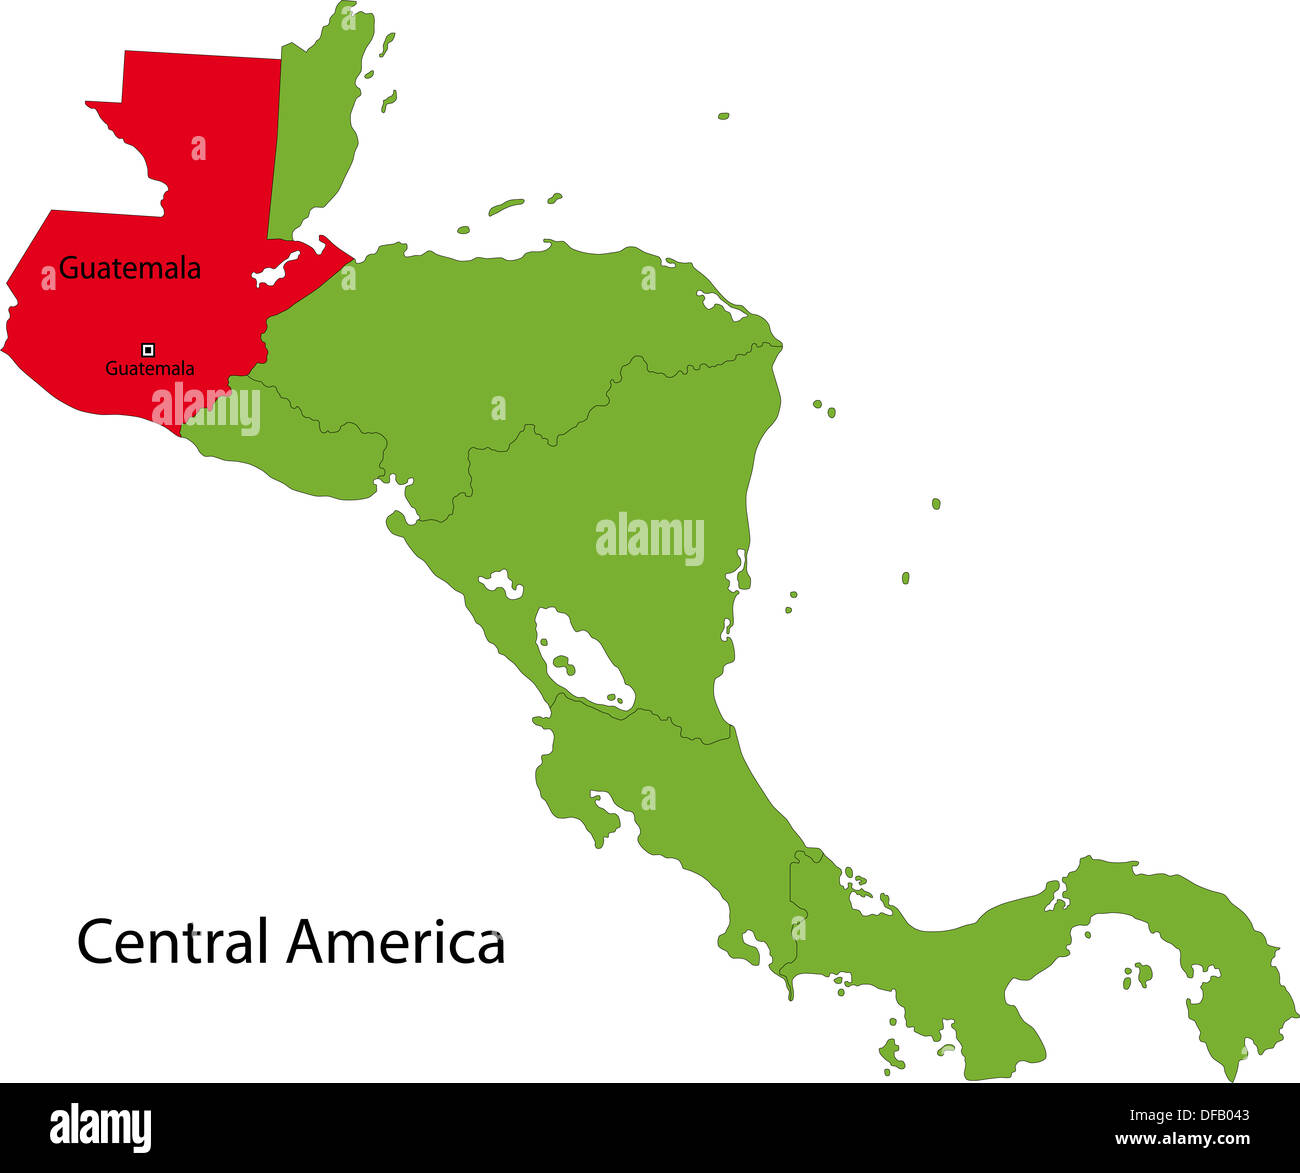 Guatemala Karte Fotos Und Bildmaterial In Hoher Auflösung Alamy 3321